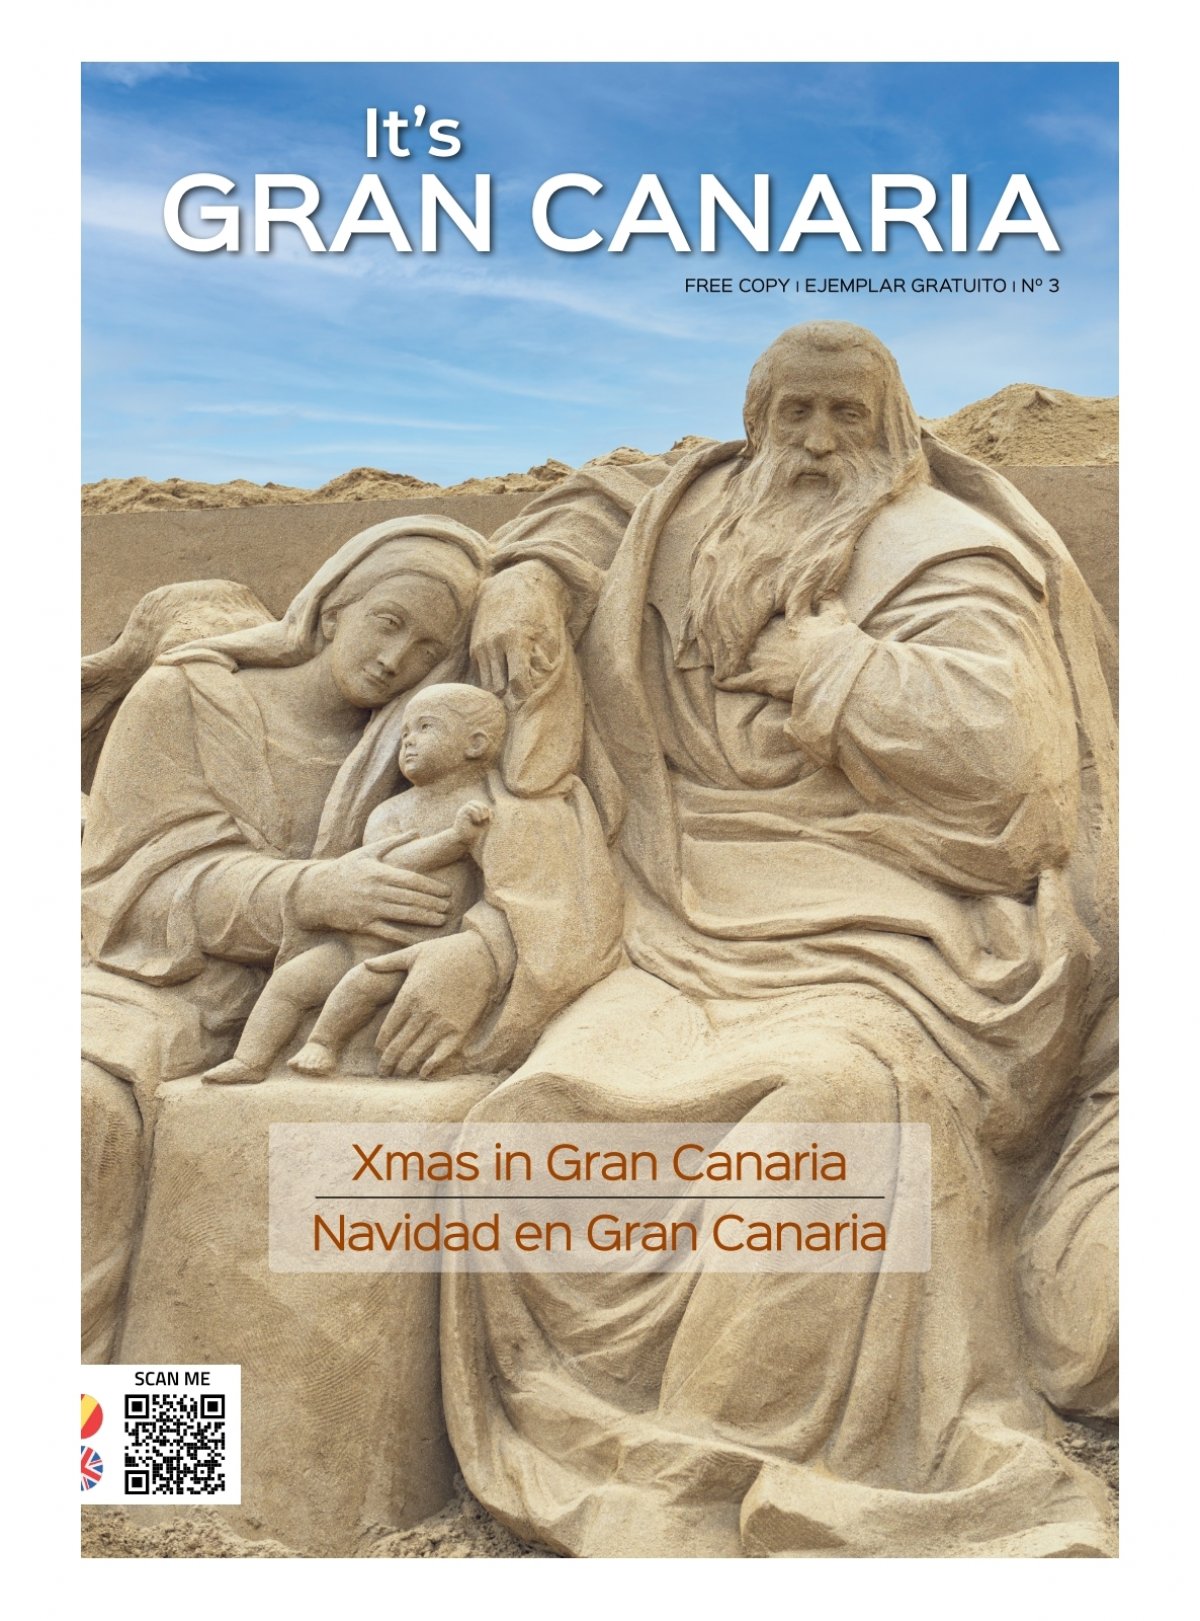 No. 3 - Its Gran Canaria Magazine